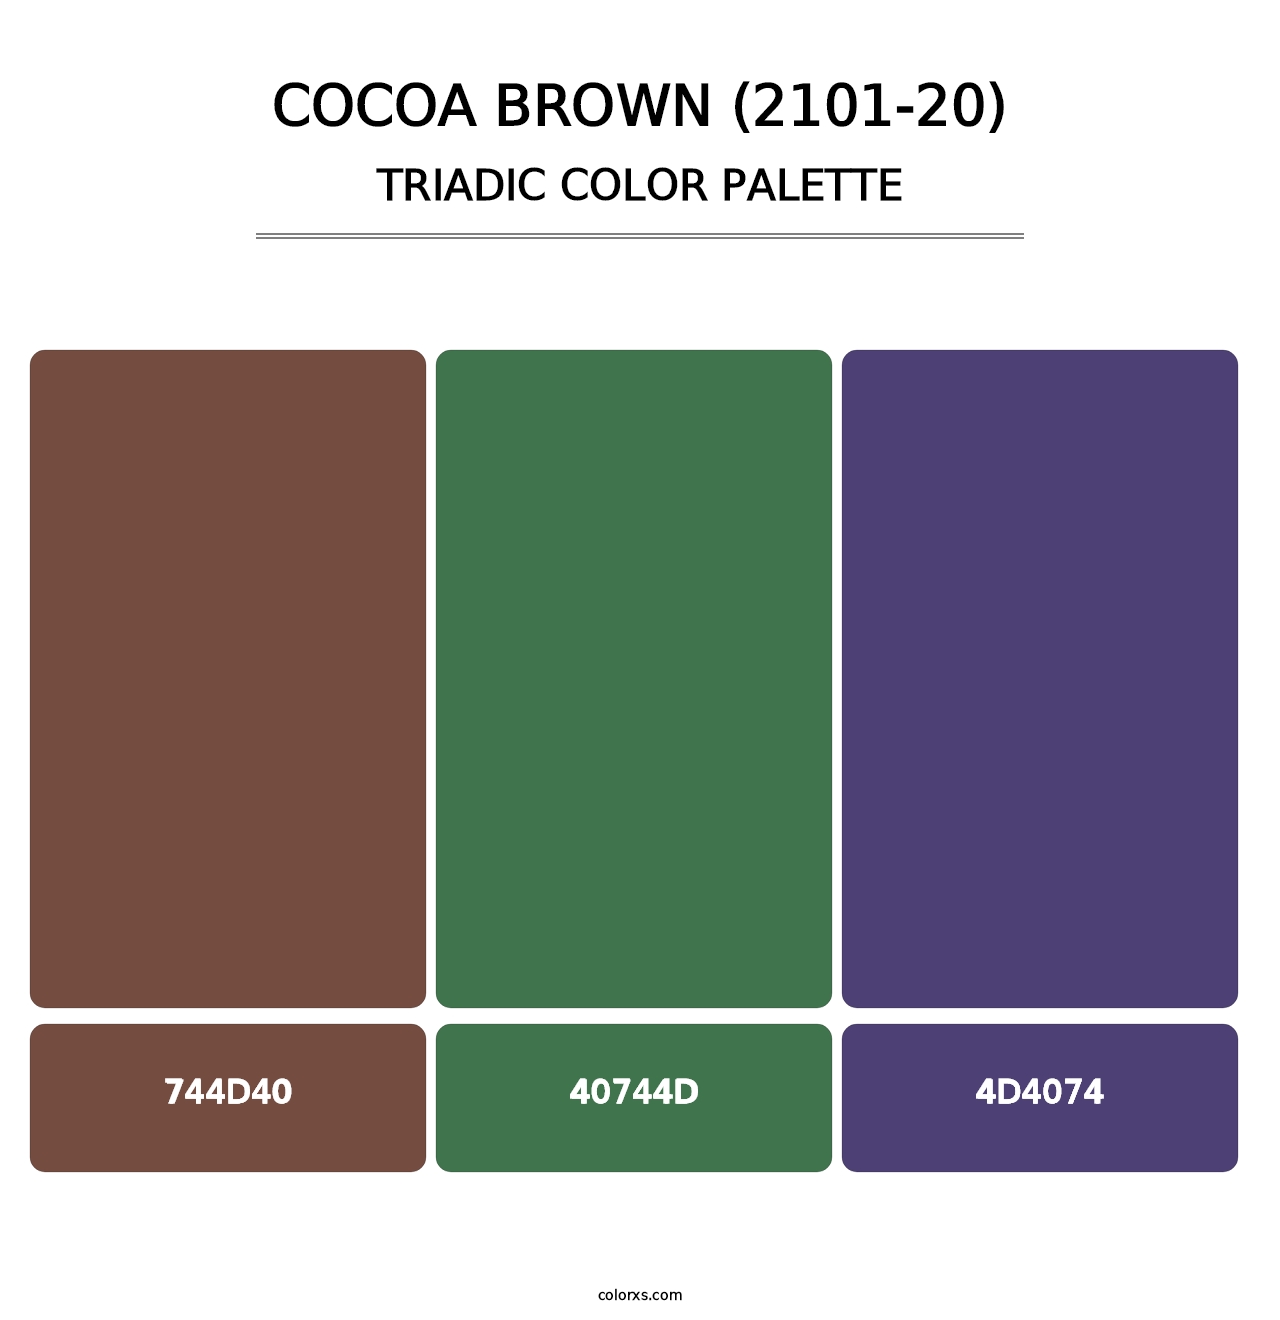 Cocoa Brown (2101-20) - Triadic Color Palette